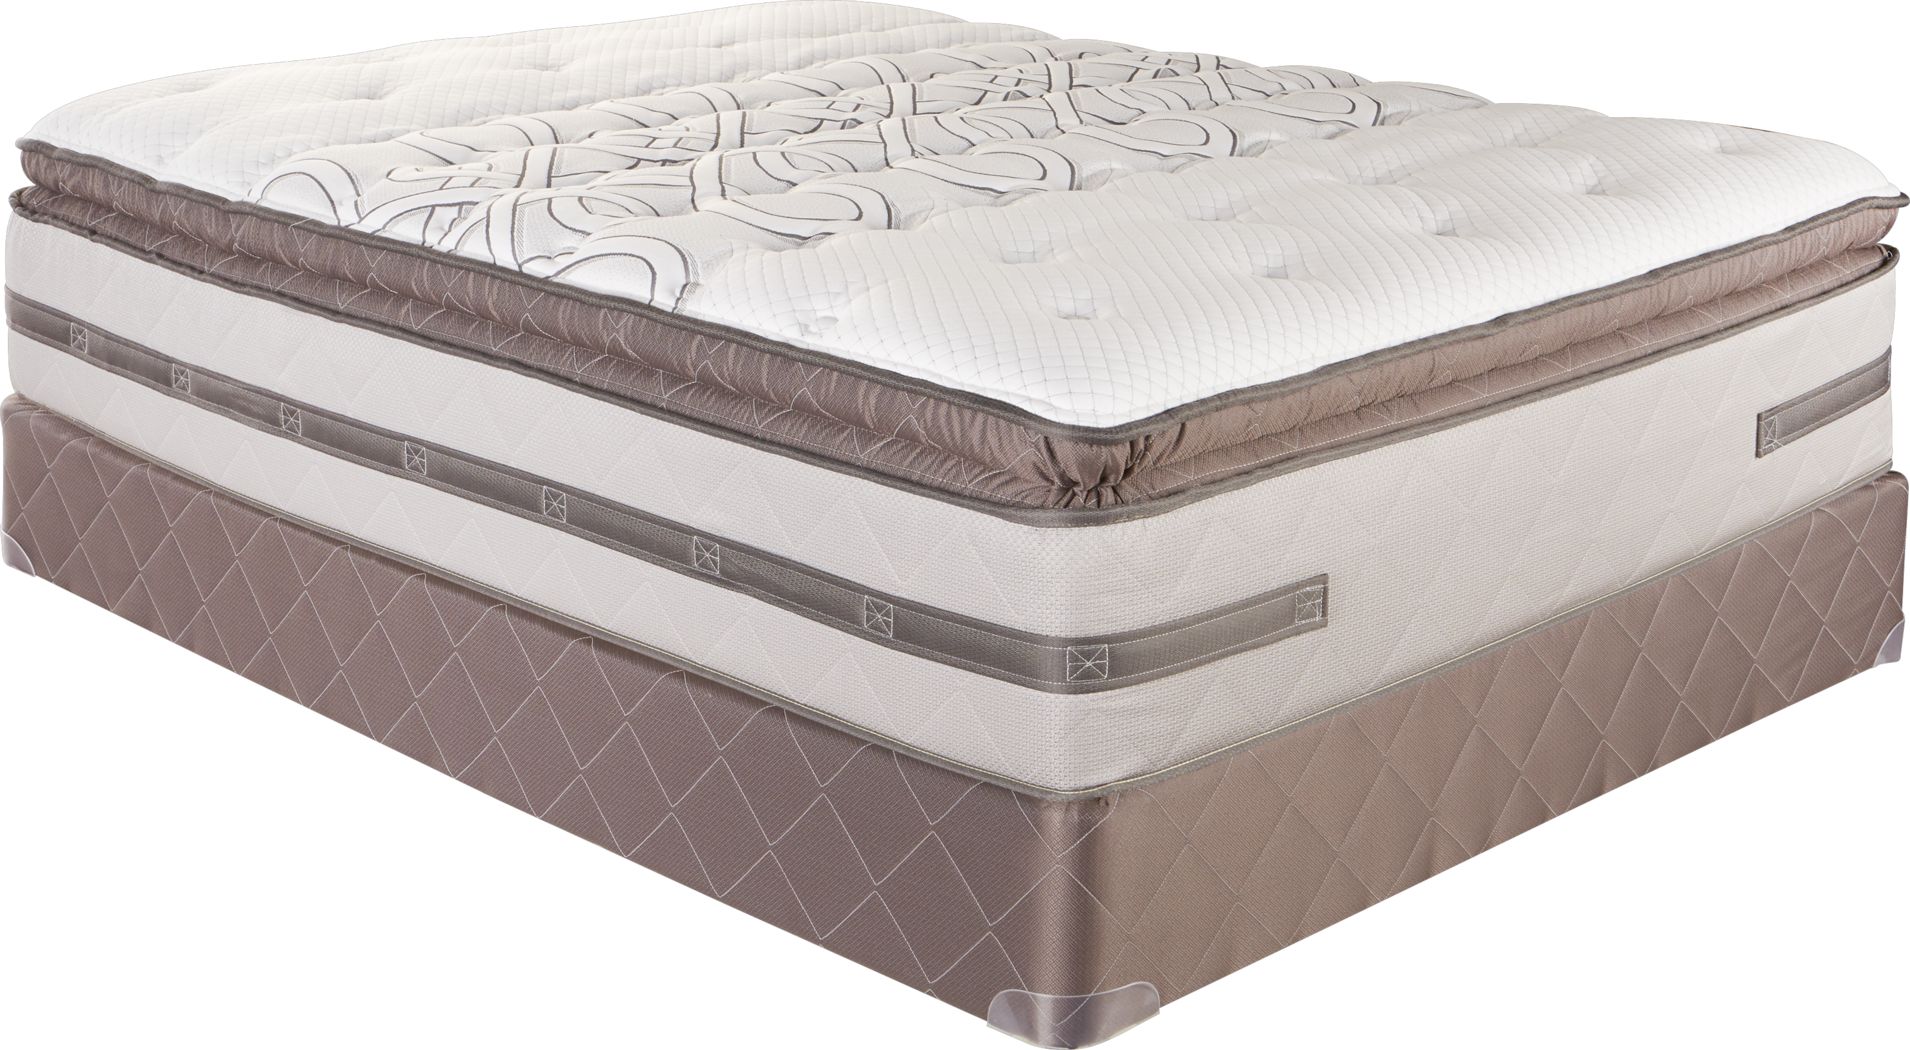 sealy platinum hotel luxury mattress pad